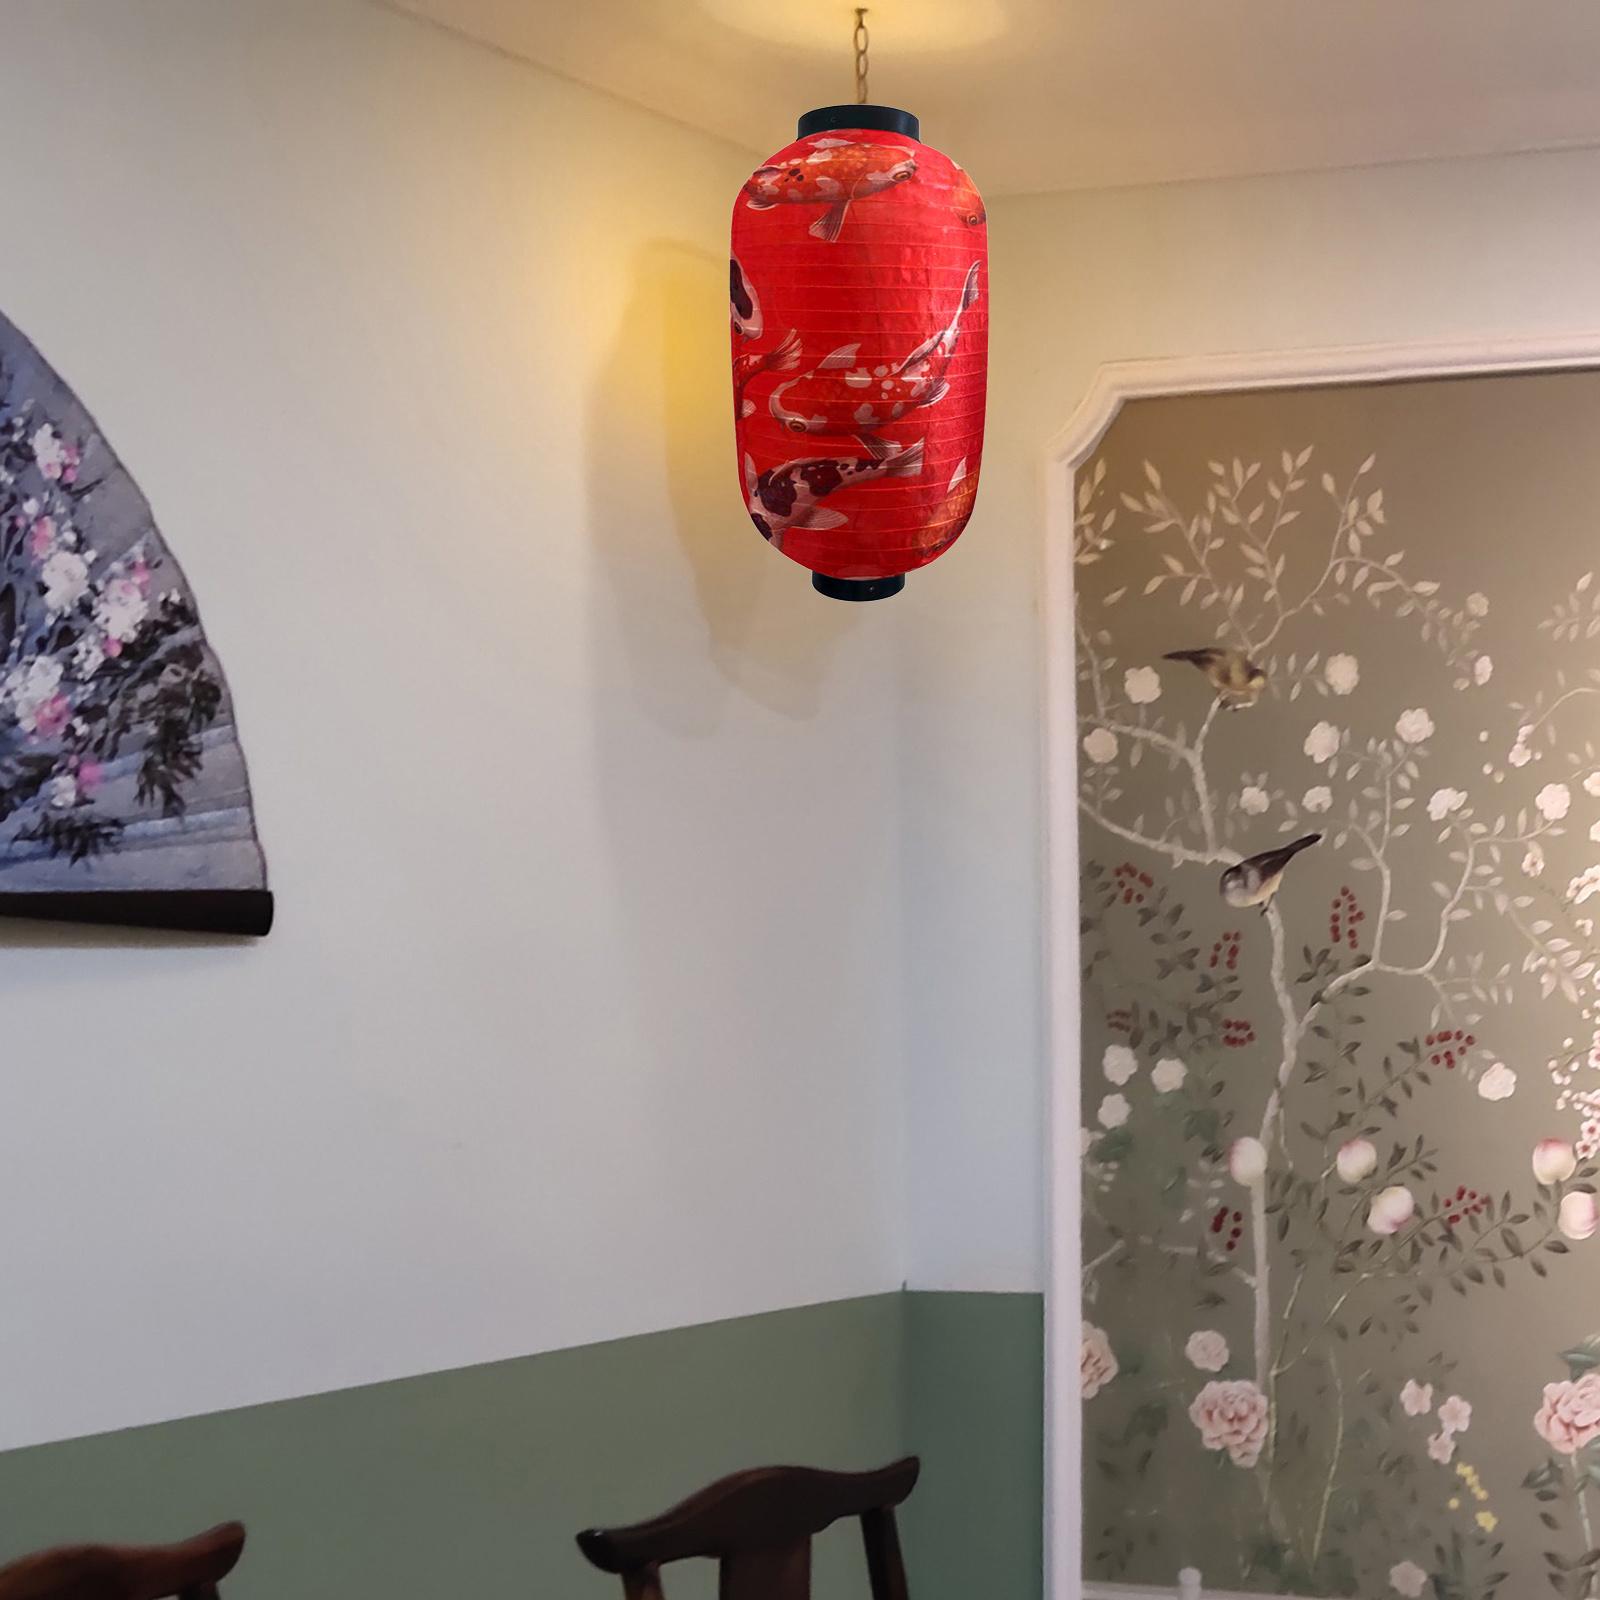 Lzakaya Restaurant Sign Lantern Japanese Bar Decorative Sushi Ramen Decor Red 30x55cm